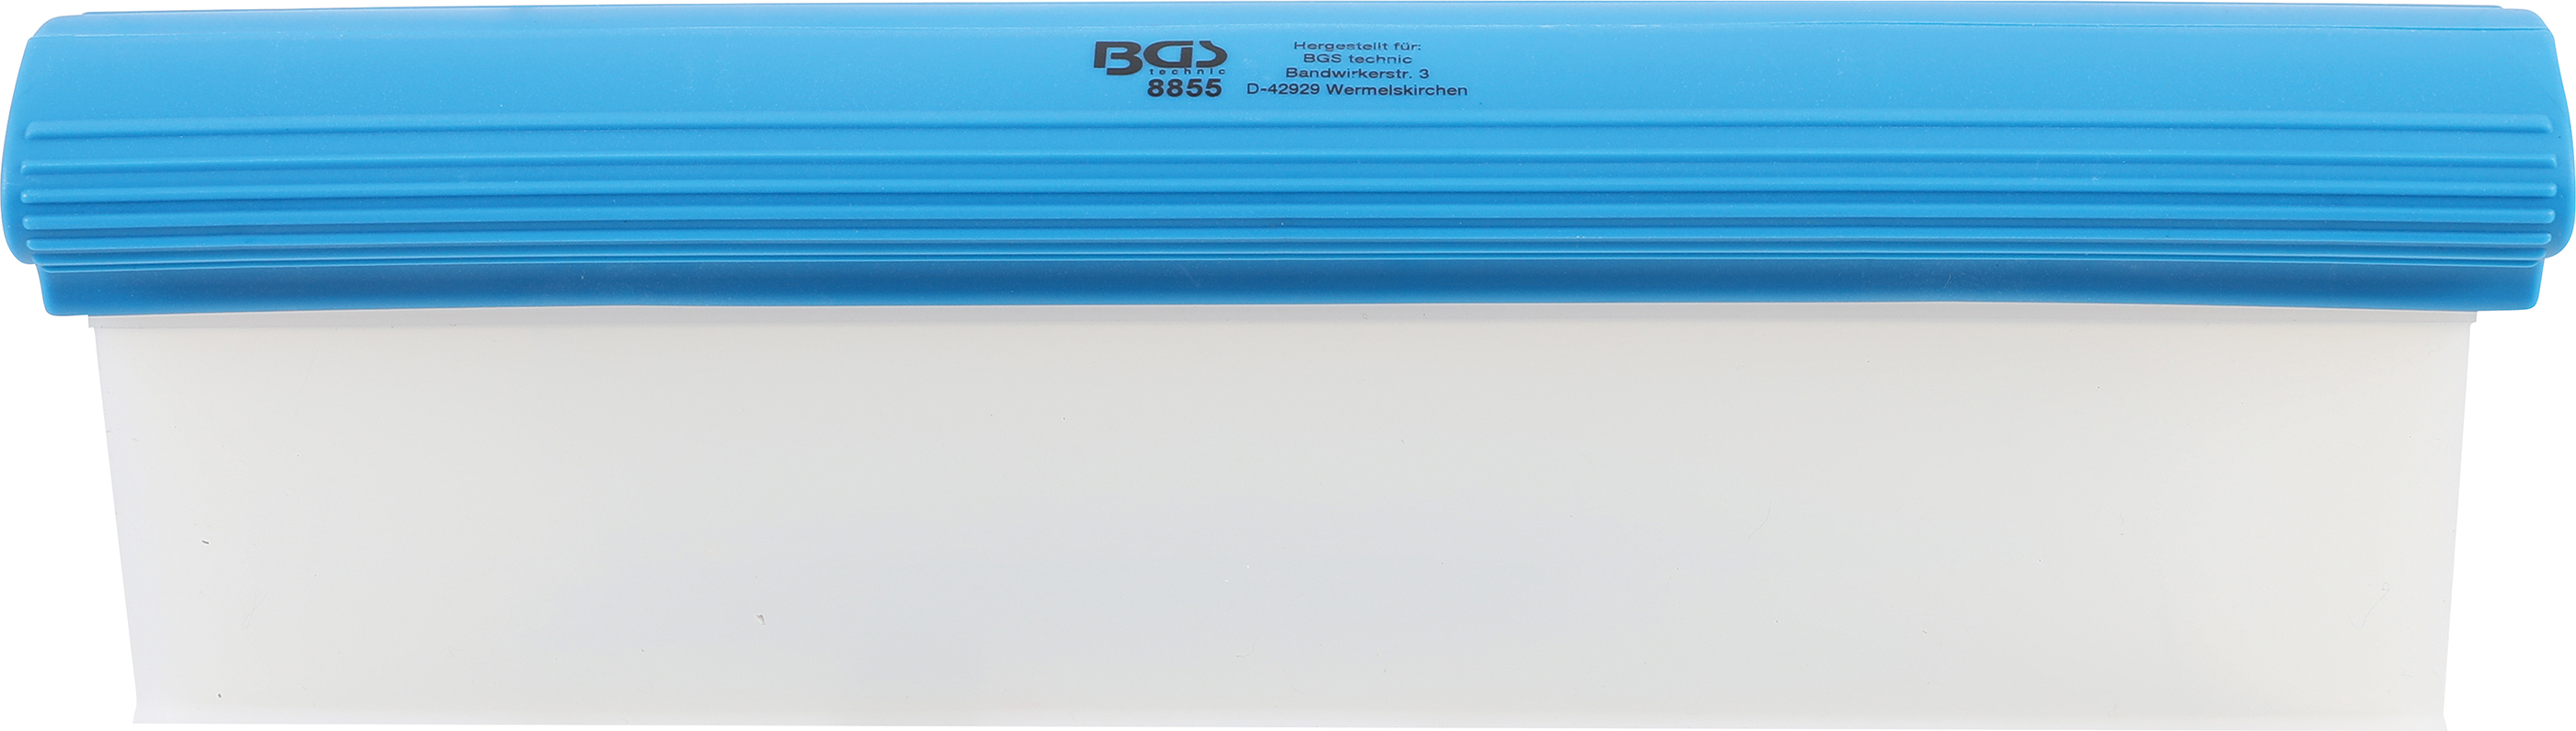 BGS 8855 Racleta silicon pentru indepartat apa, 300 mm